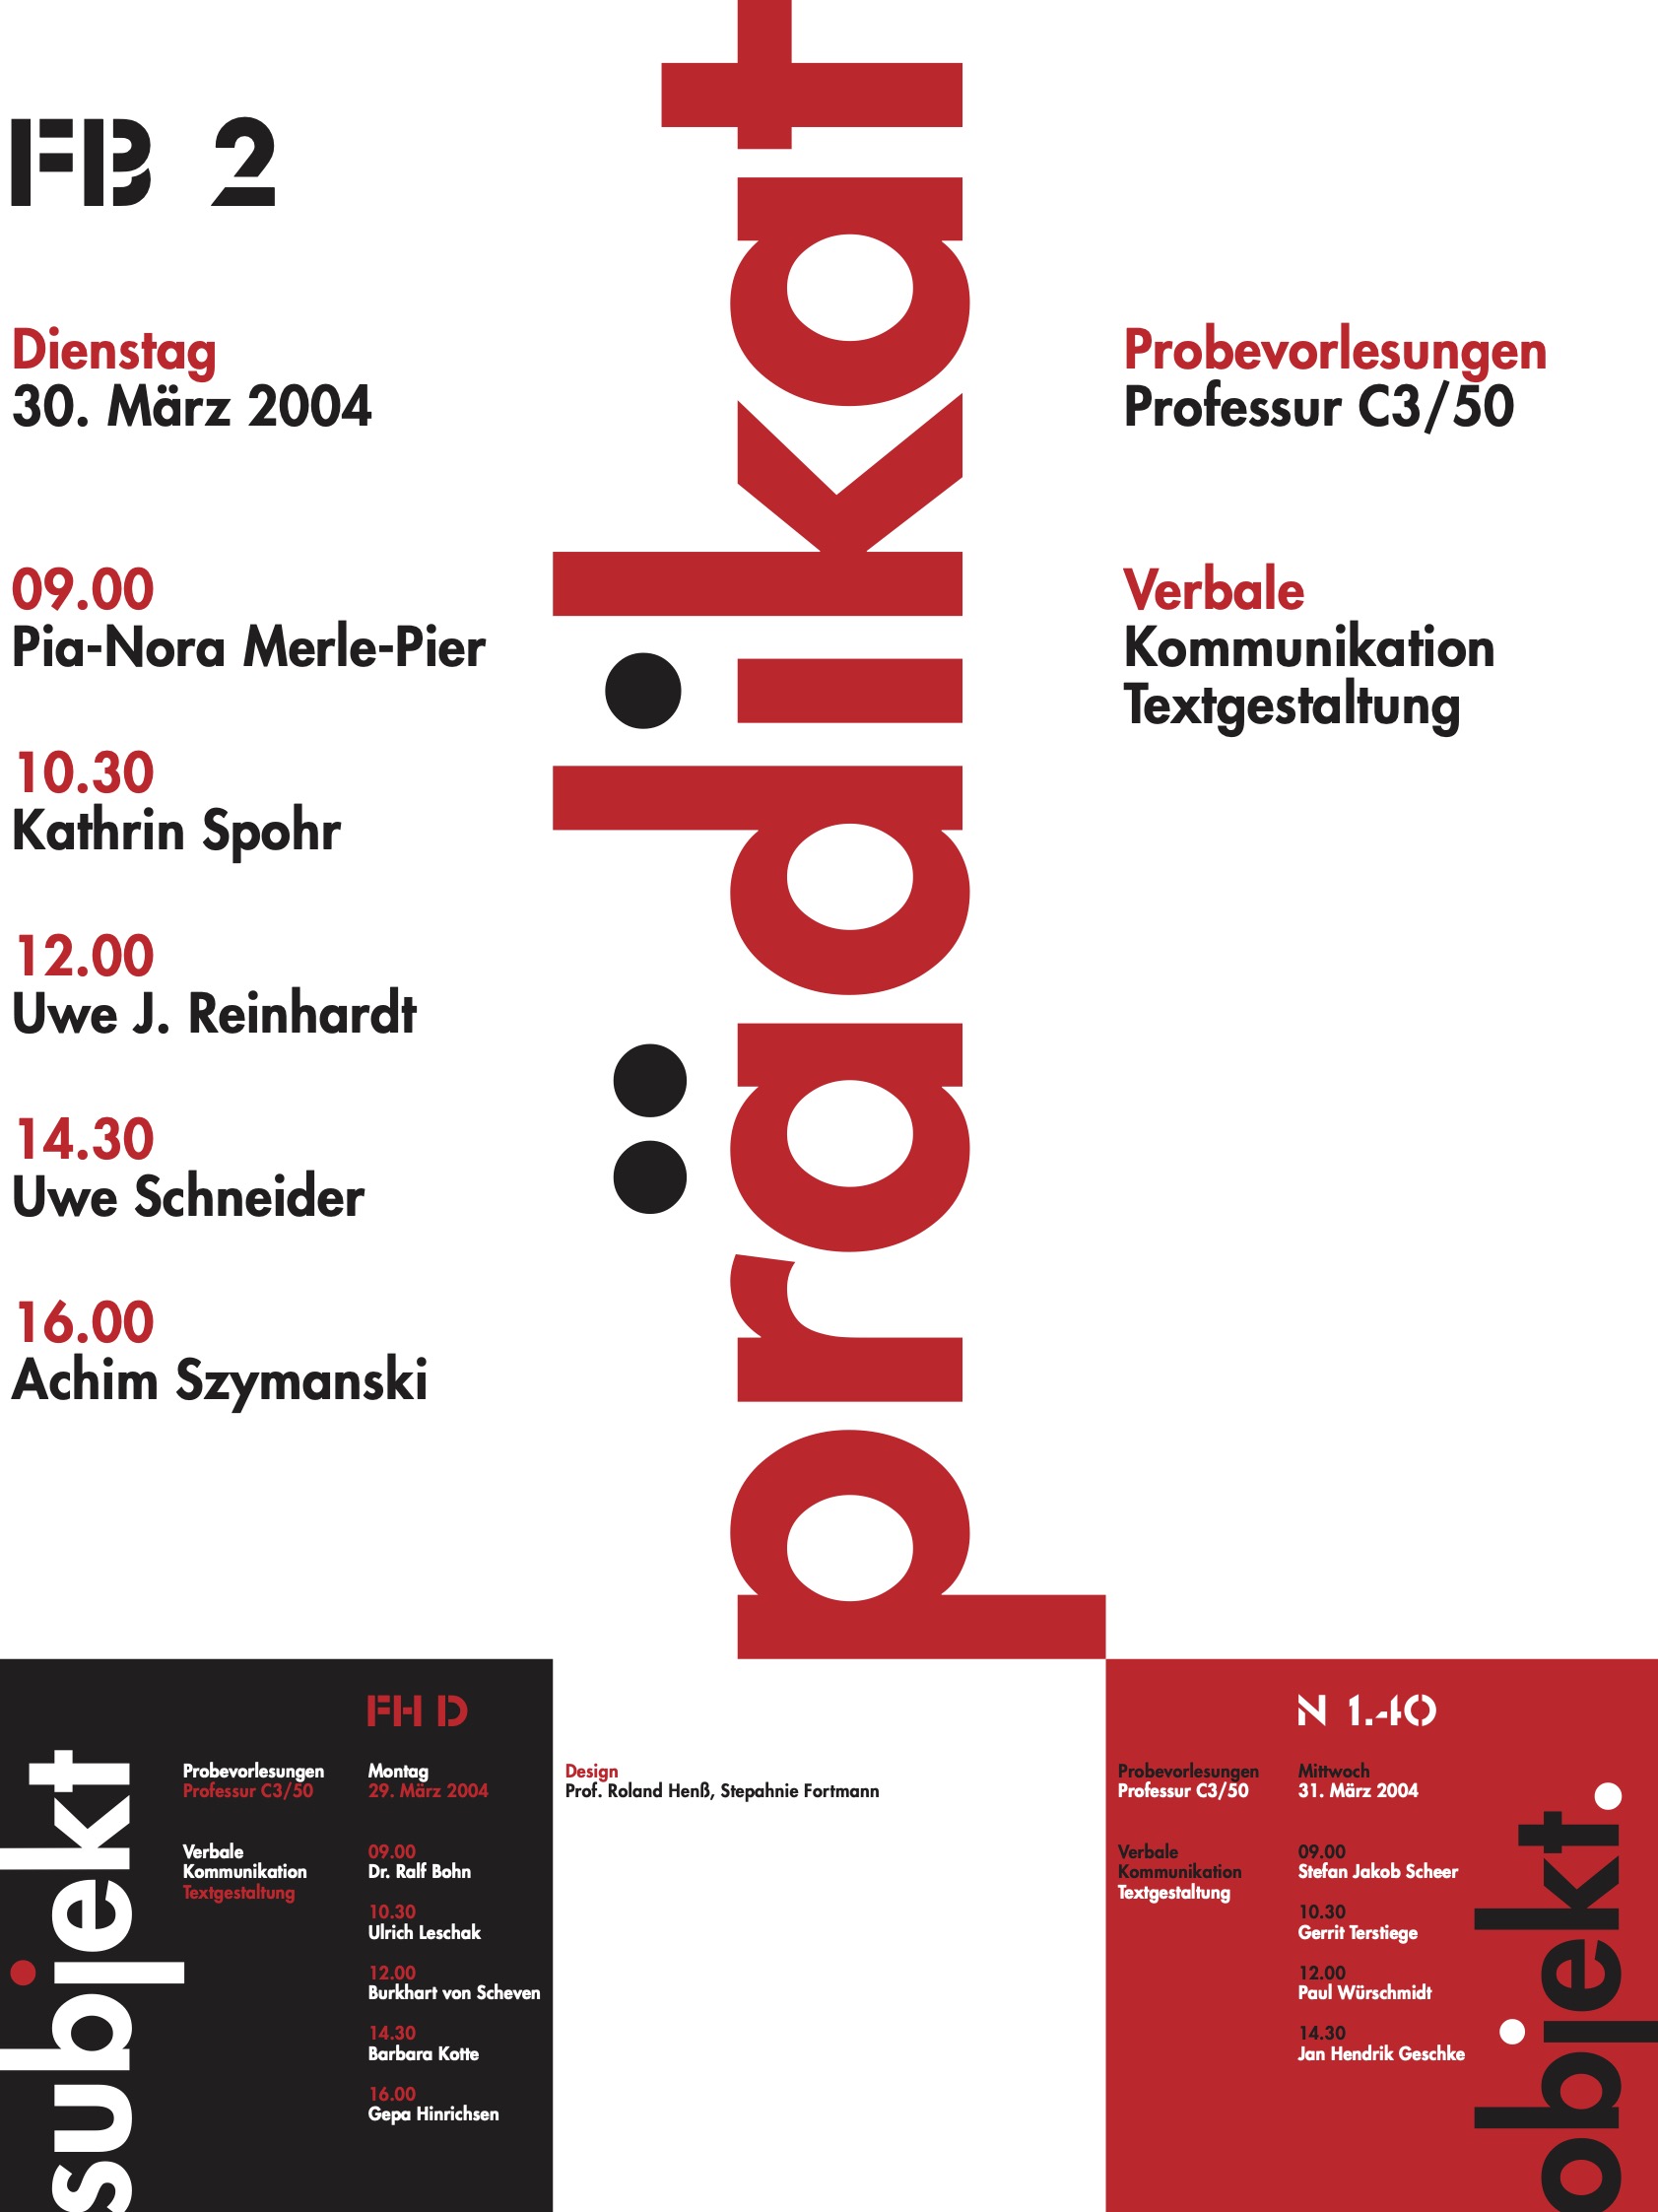 Gestaltet: Stephanie Fortmann, Betreut: Roland Henß, Titel: prädikat, Jahr: 2004